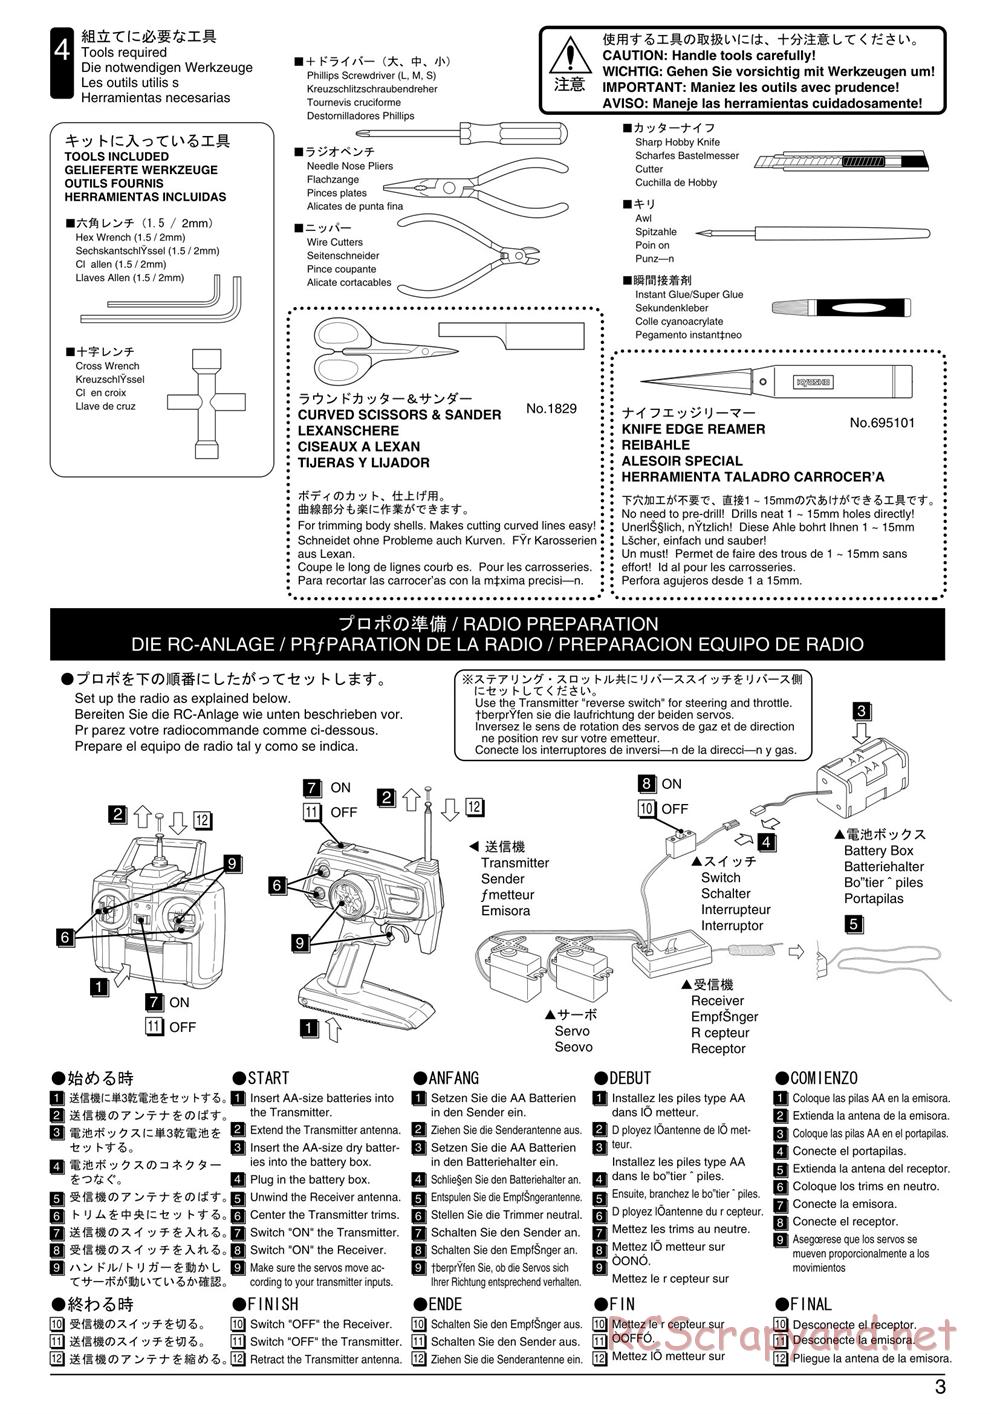 Kyosho - PureTen GP Alpha 2 - Manual - Page 3